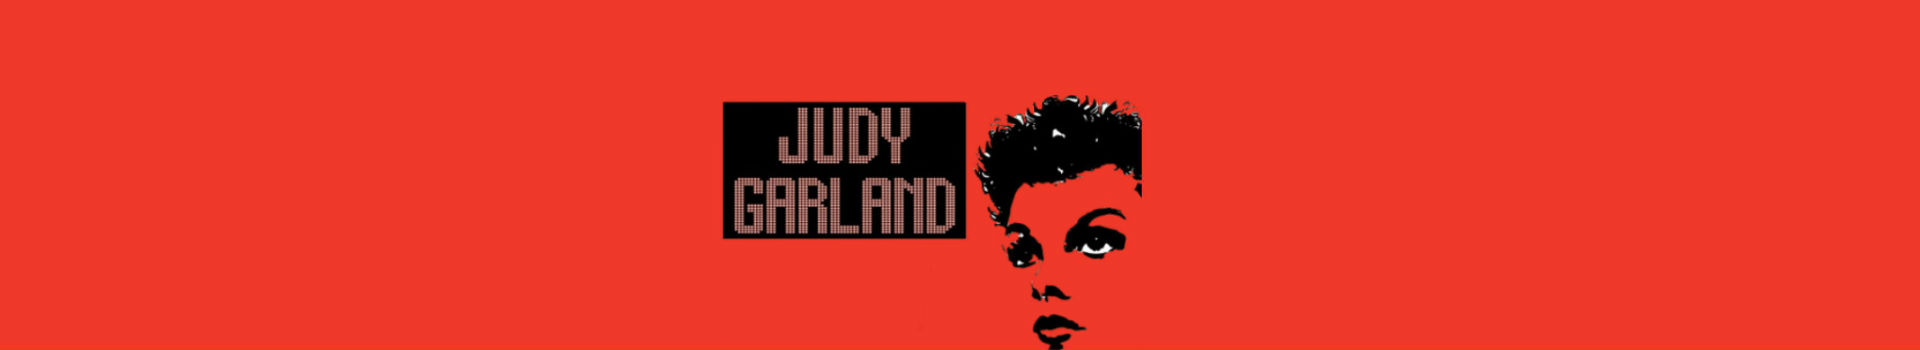 Judy Garland banner image